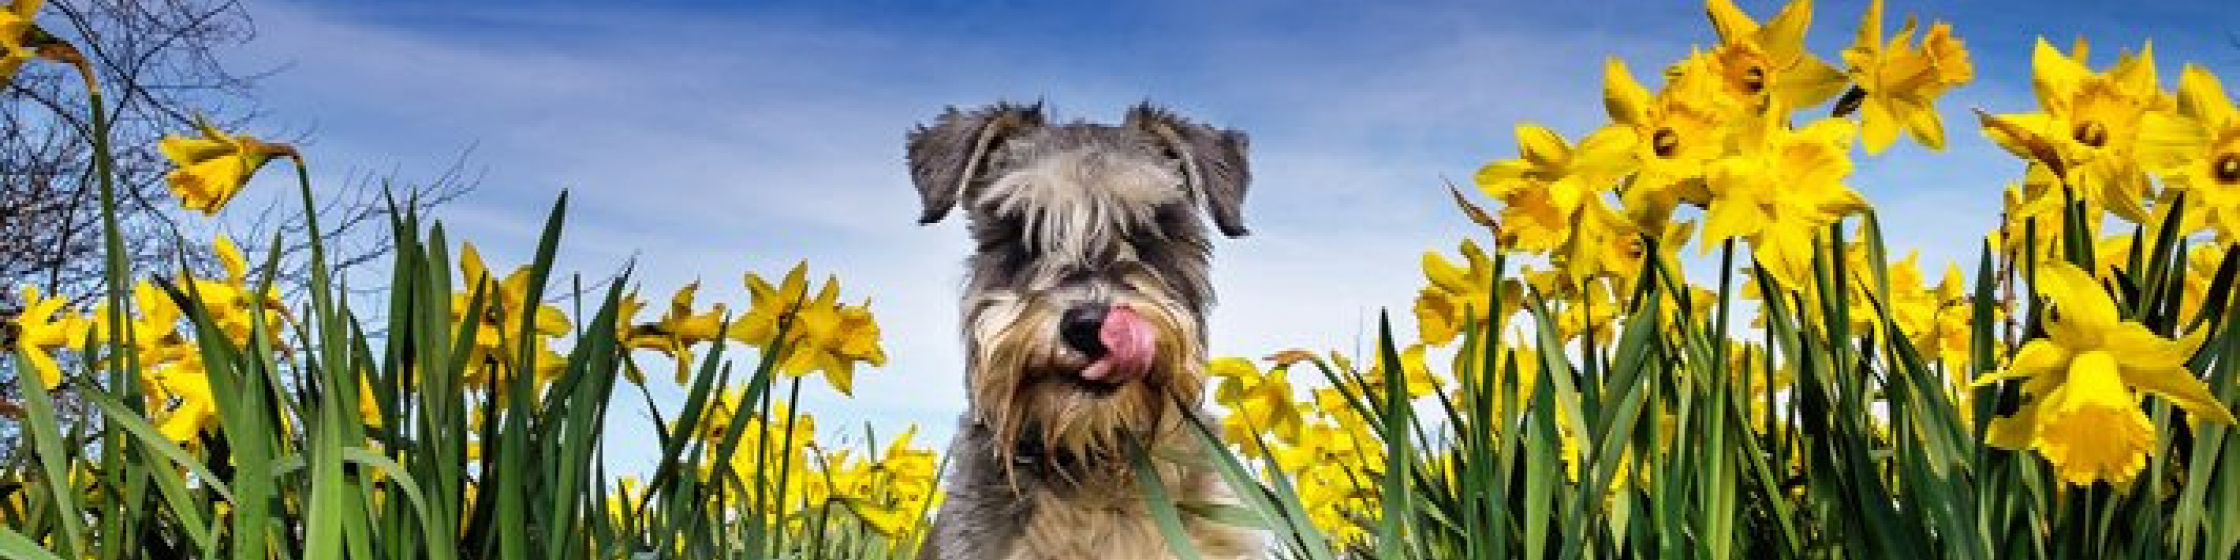 gallery/thumb2-4k-schnauzer-yellow-flowers-cute-animals-pets